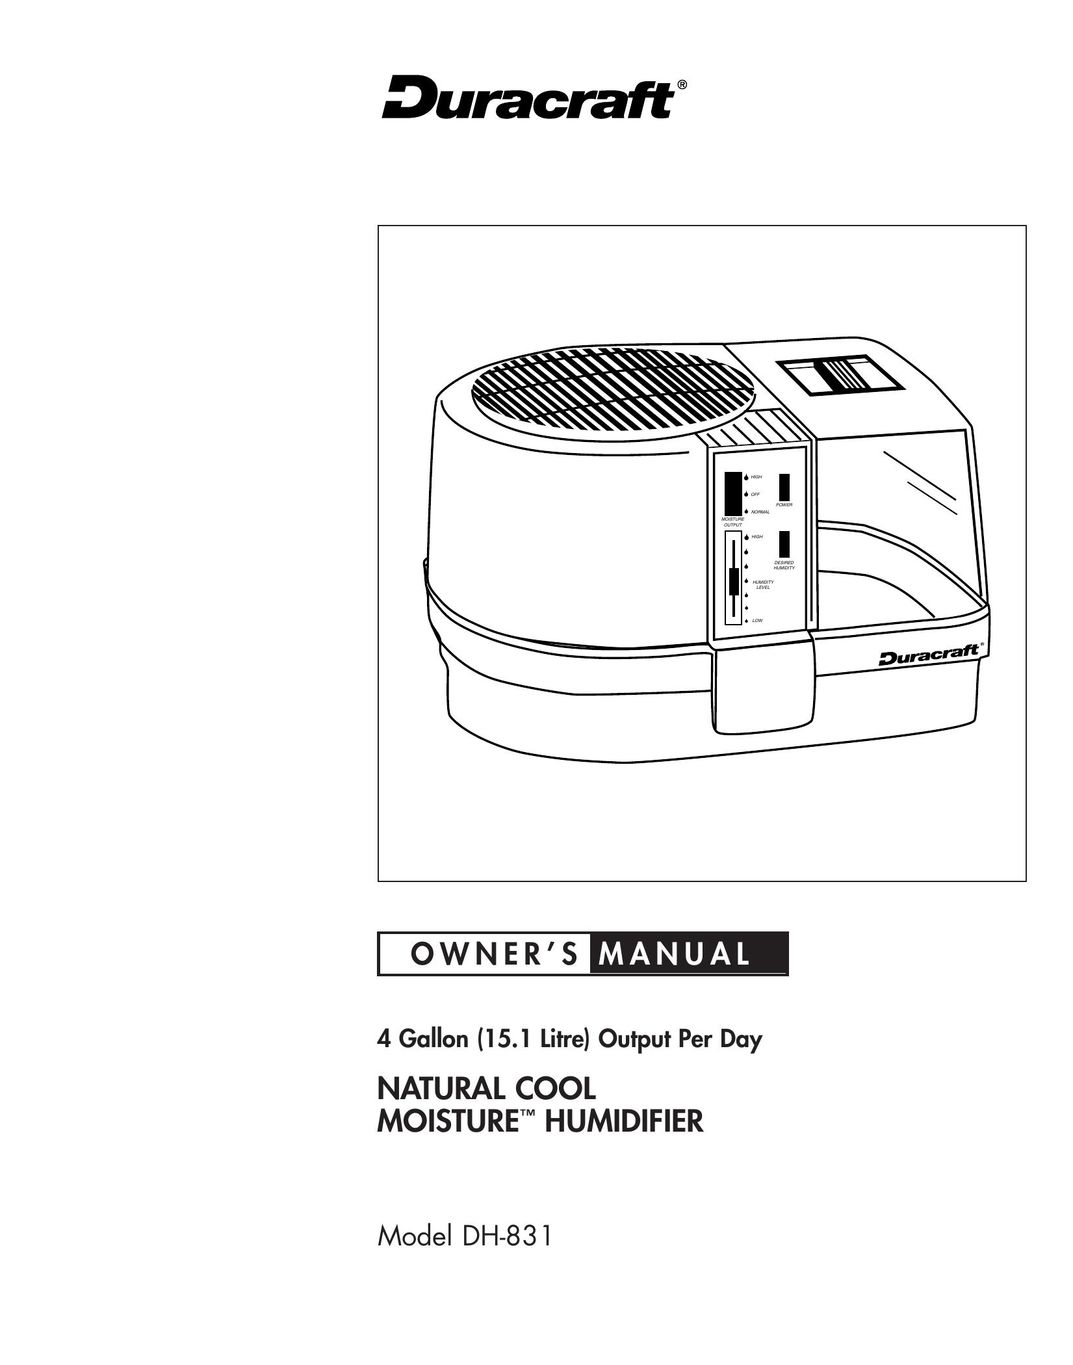 Duracraft DH-831 Humidifier User Manual